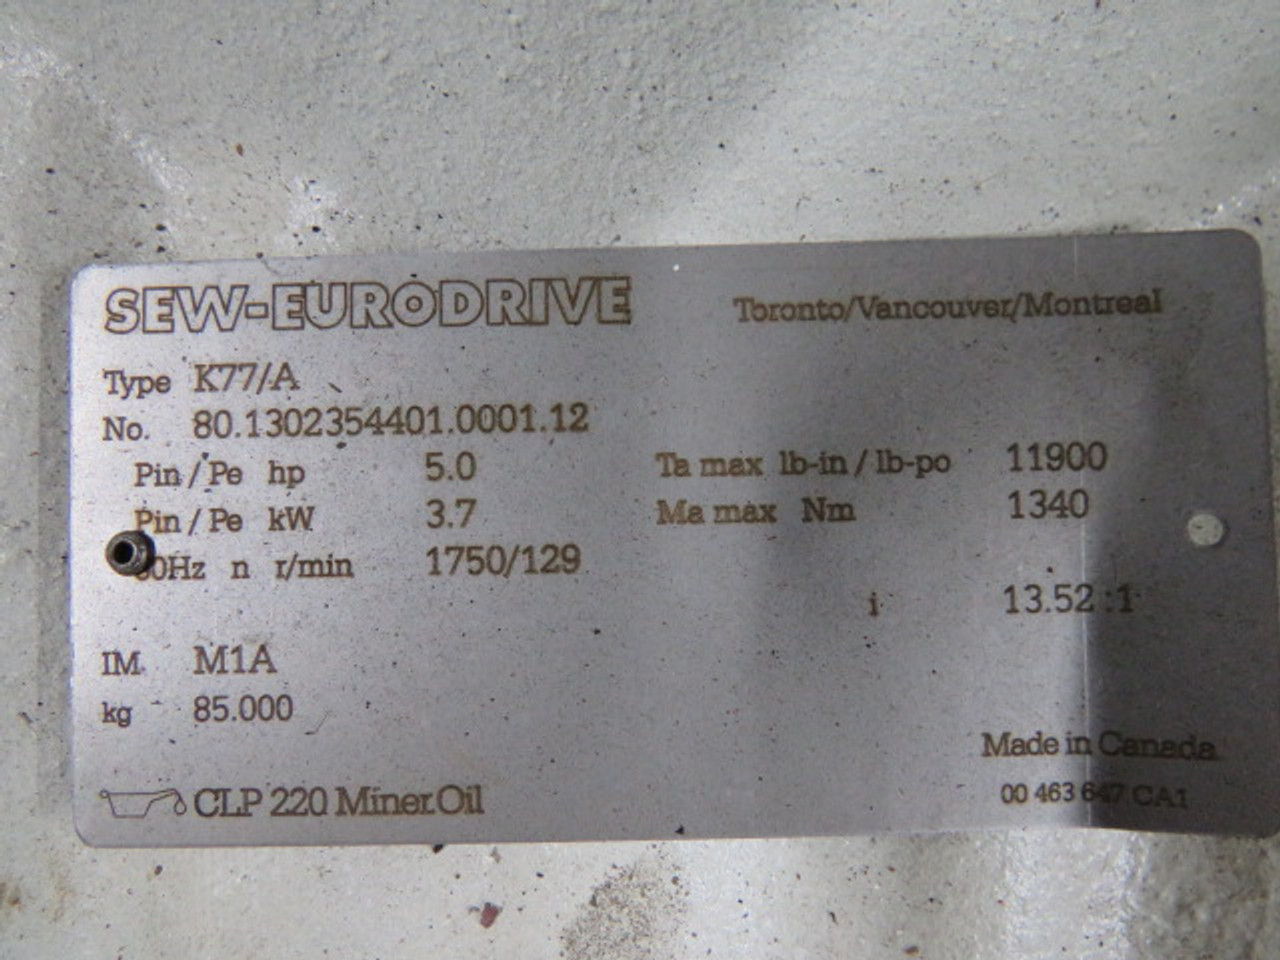 Sew-Eurodrive 5HP 1750/129rpm 330/575V TEFC c/w Gear Reducer 13.52:1 USED